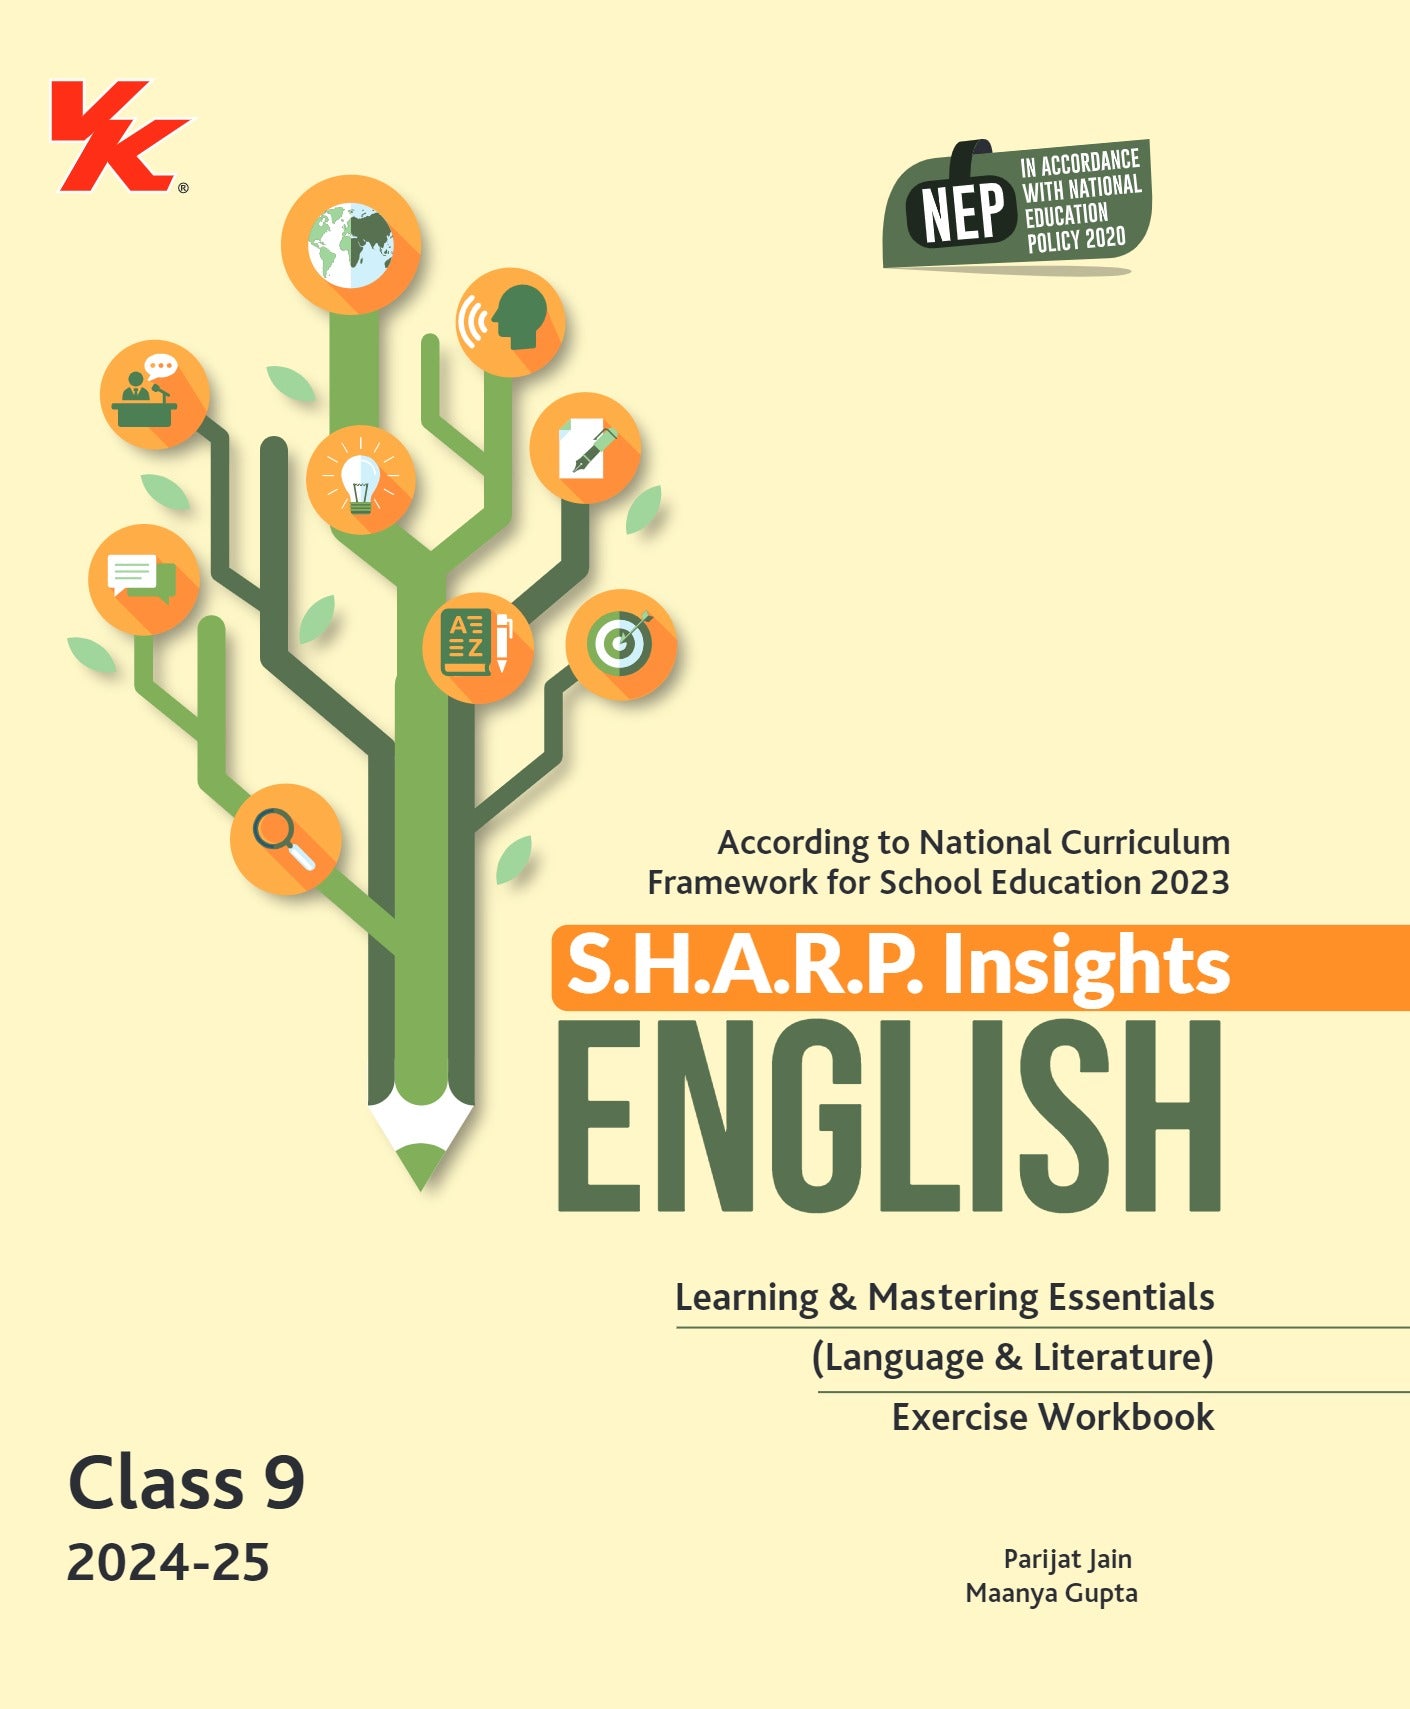 S.H.A.R.P. Insights for English (CORE) Exercise Workbook for Class 9 CBSE 2024-25 by Parijat Jain (IIT-D, IIM-A) & Maanya Gupta (IIM-A)